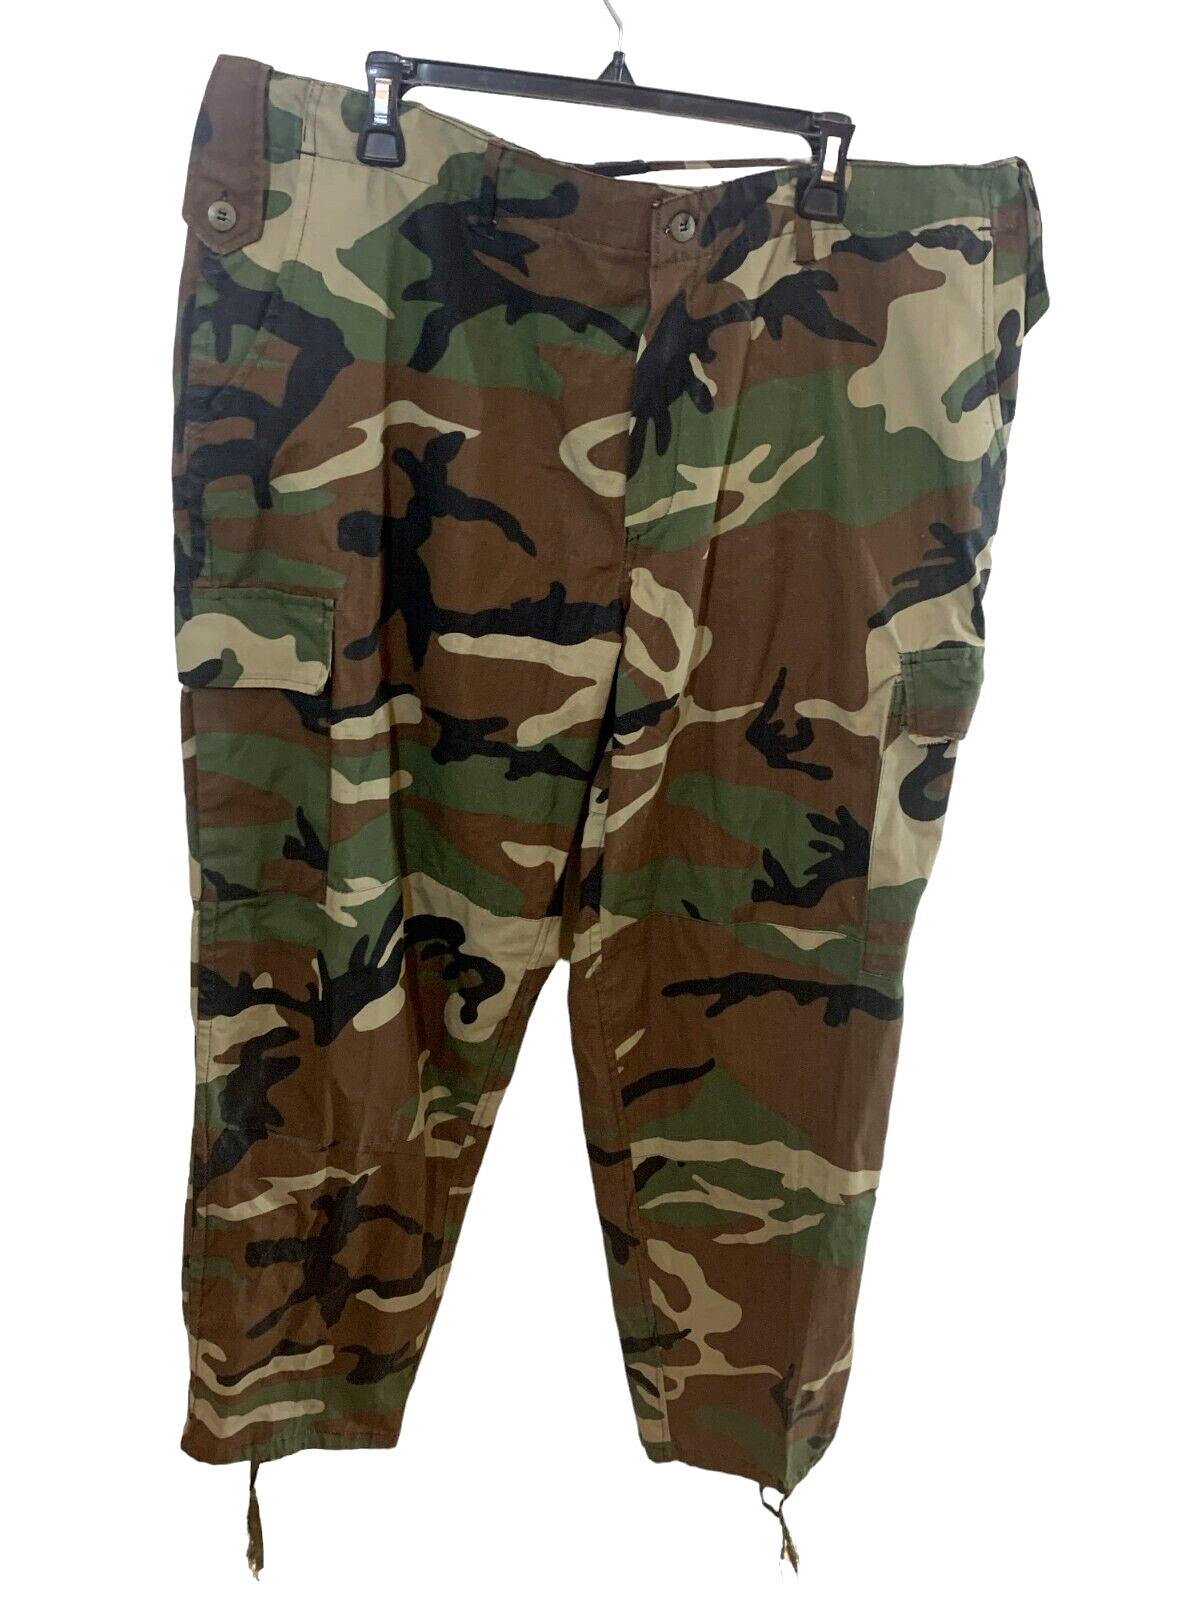 Iraqi Army Guard OIF Desert Storm Woodland Uniform Pants Trousers size XL NWOT